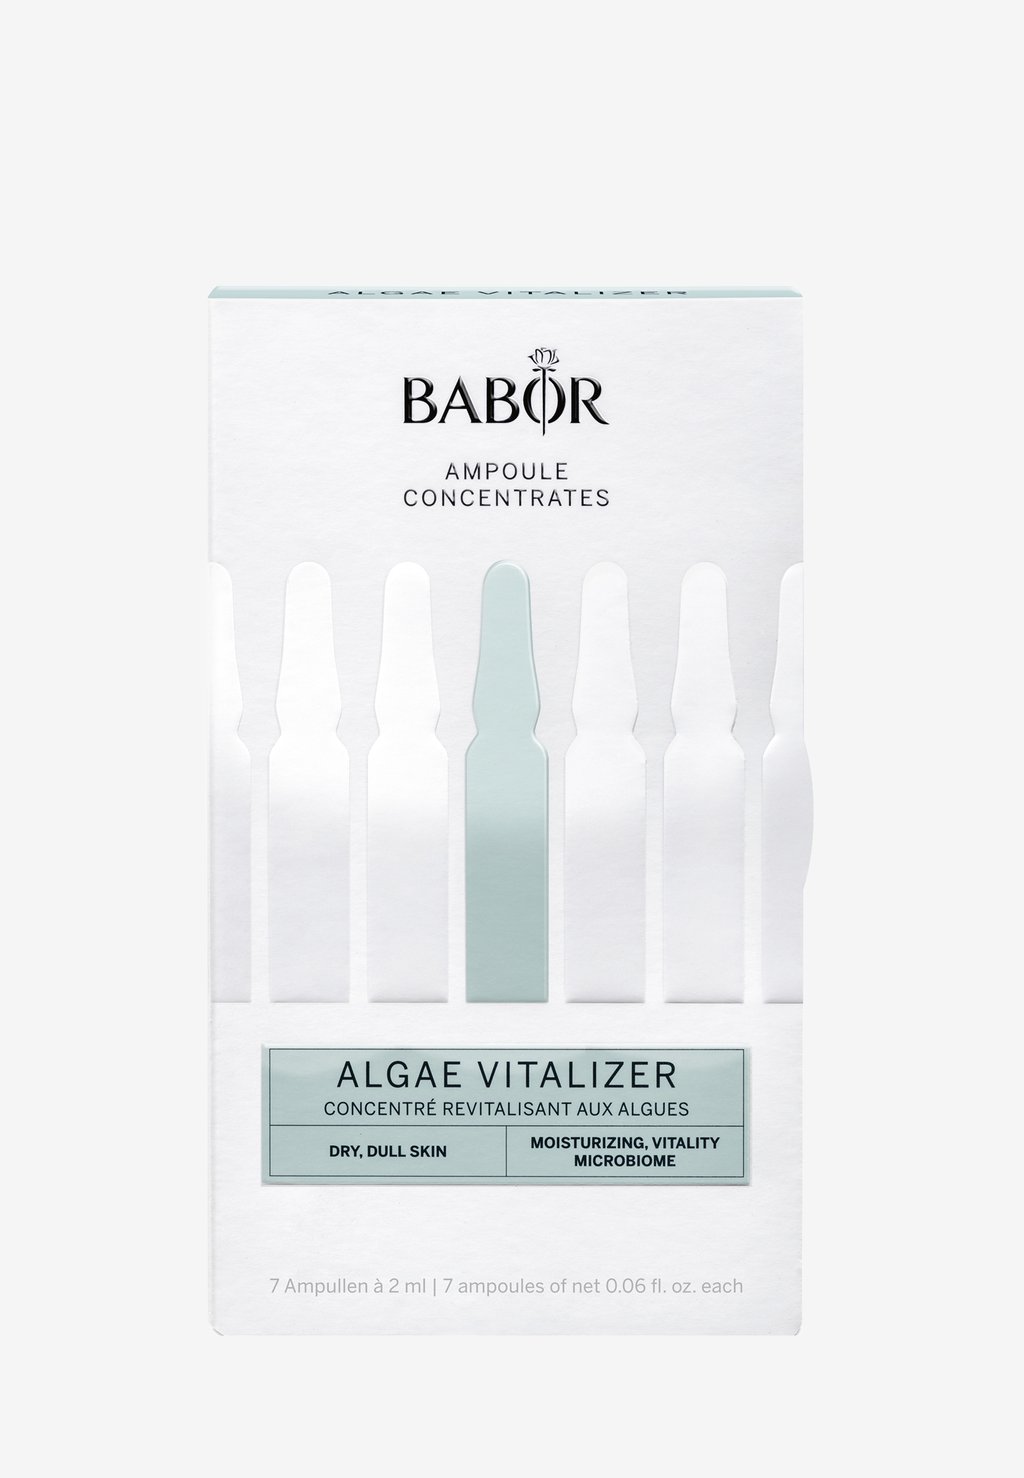 Набор для ухода за кожей Algae Vitalizer BABOR набор neutrogena для ухода за кожей